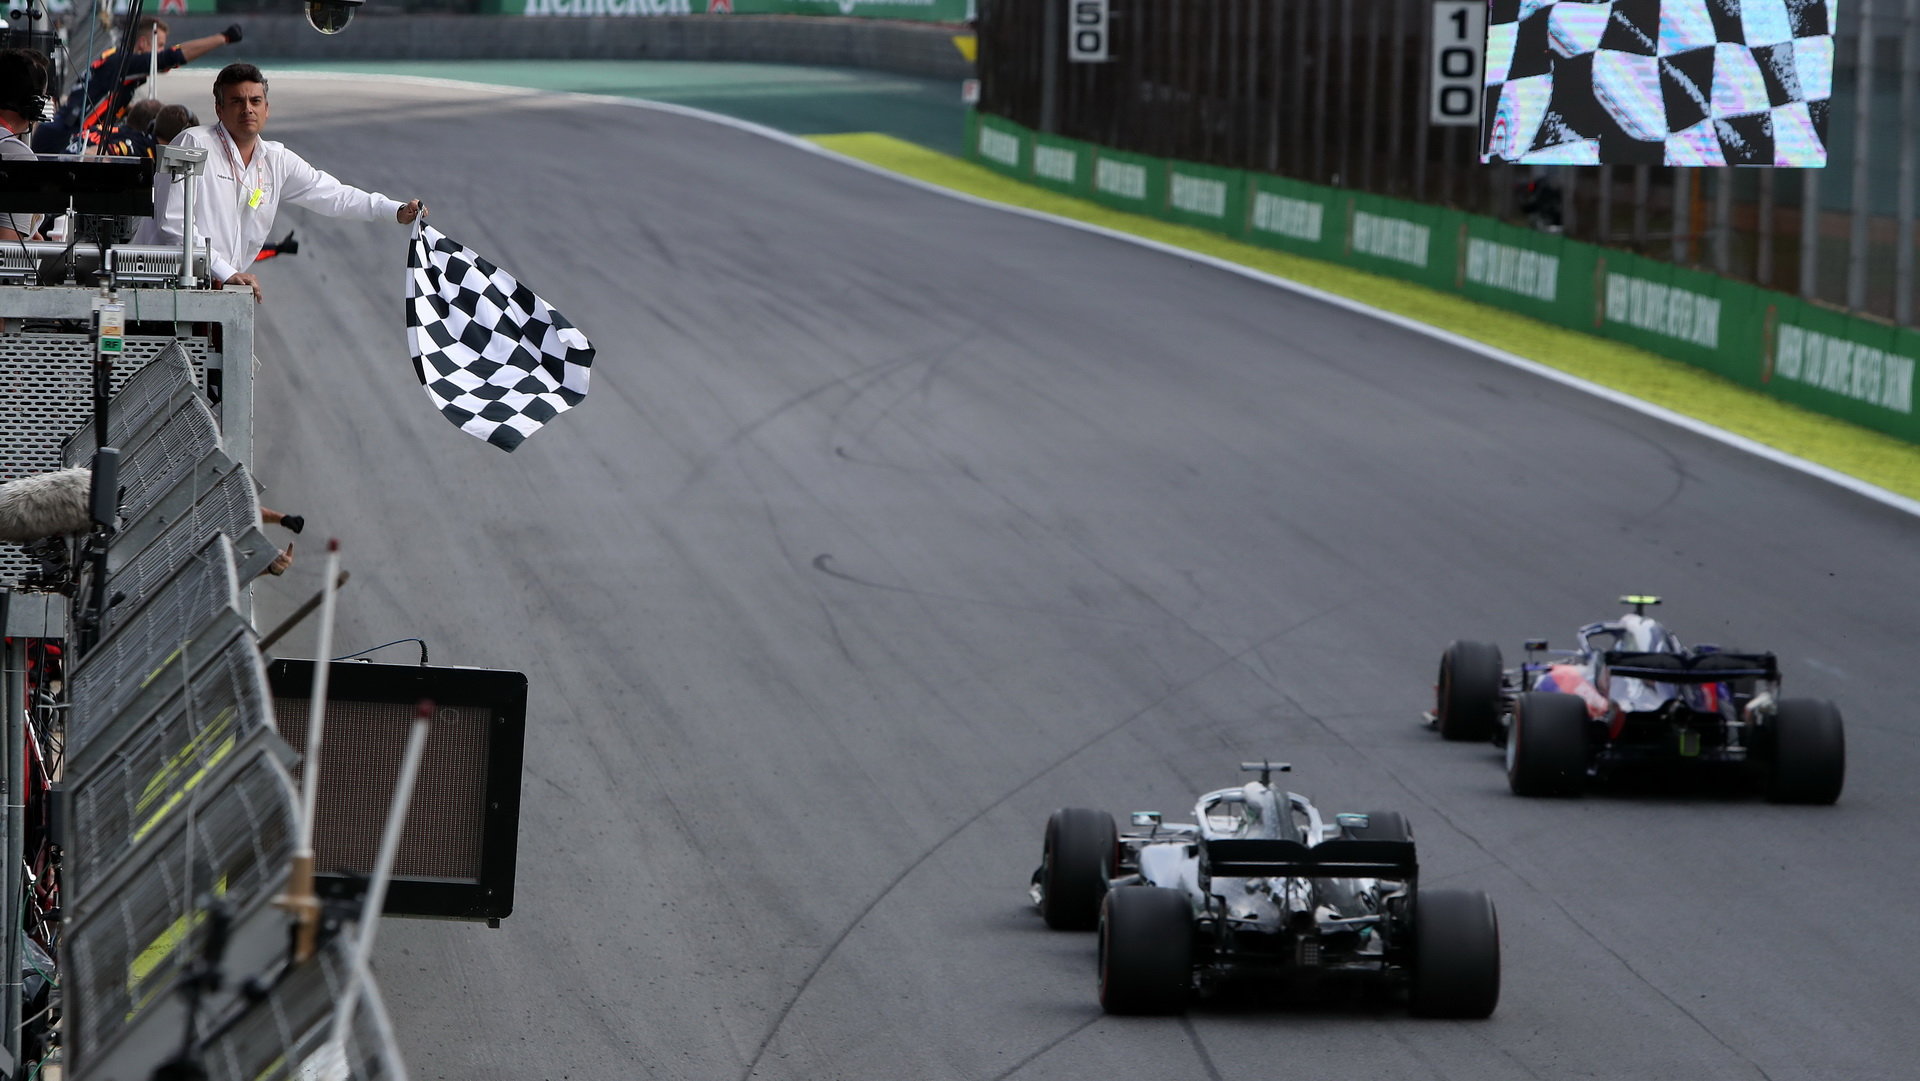 Pierre Gasly a Lewis Hamilton v cíli závodu v Brazílii